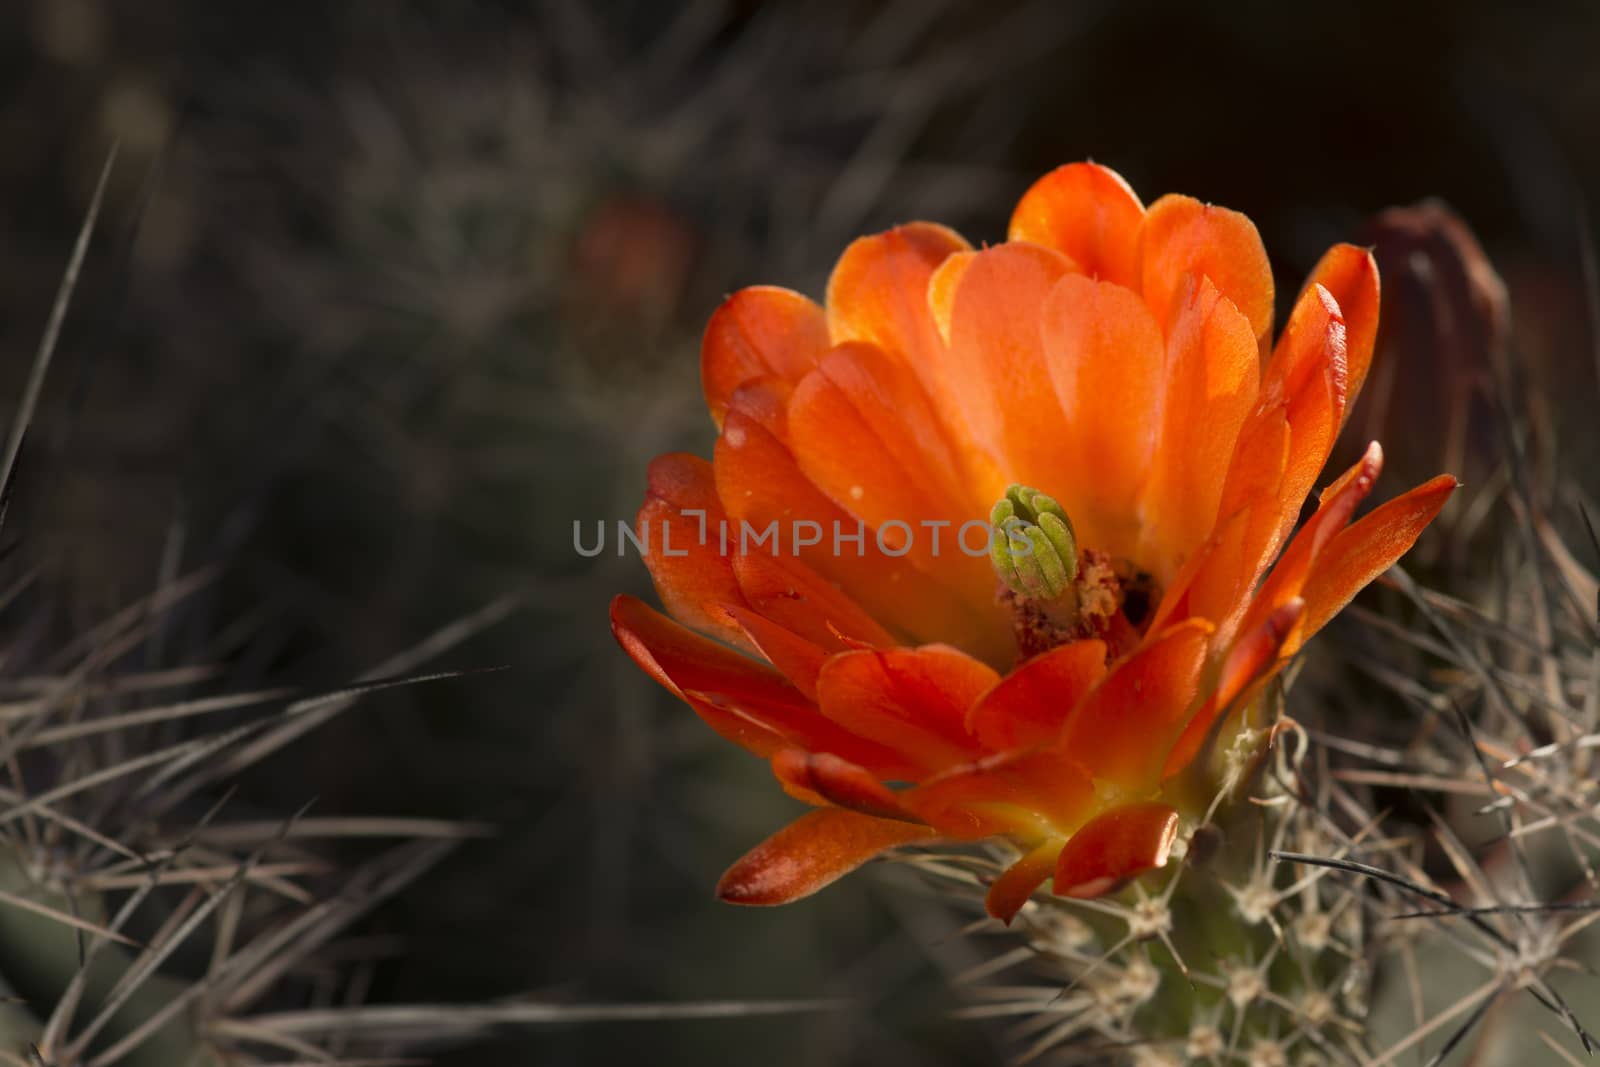 Desert bloom - beautiful red flower barrel cactus